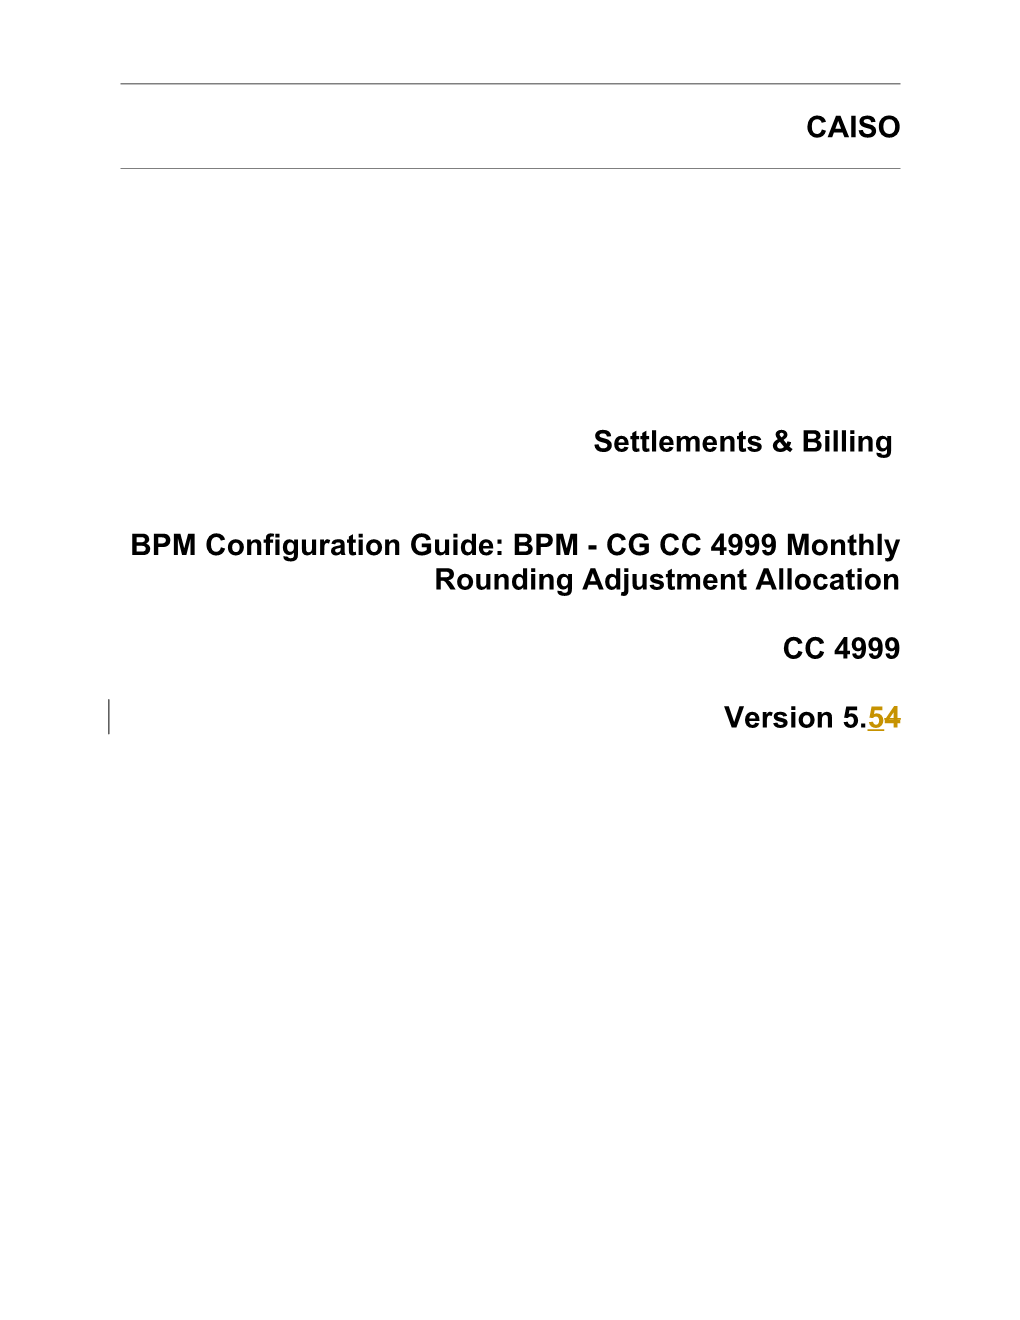 BPM - CG CC 4999 Monthly Rounding Adjustment Allocation